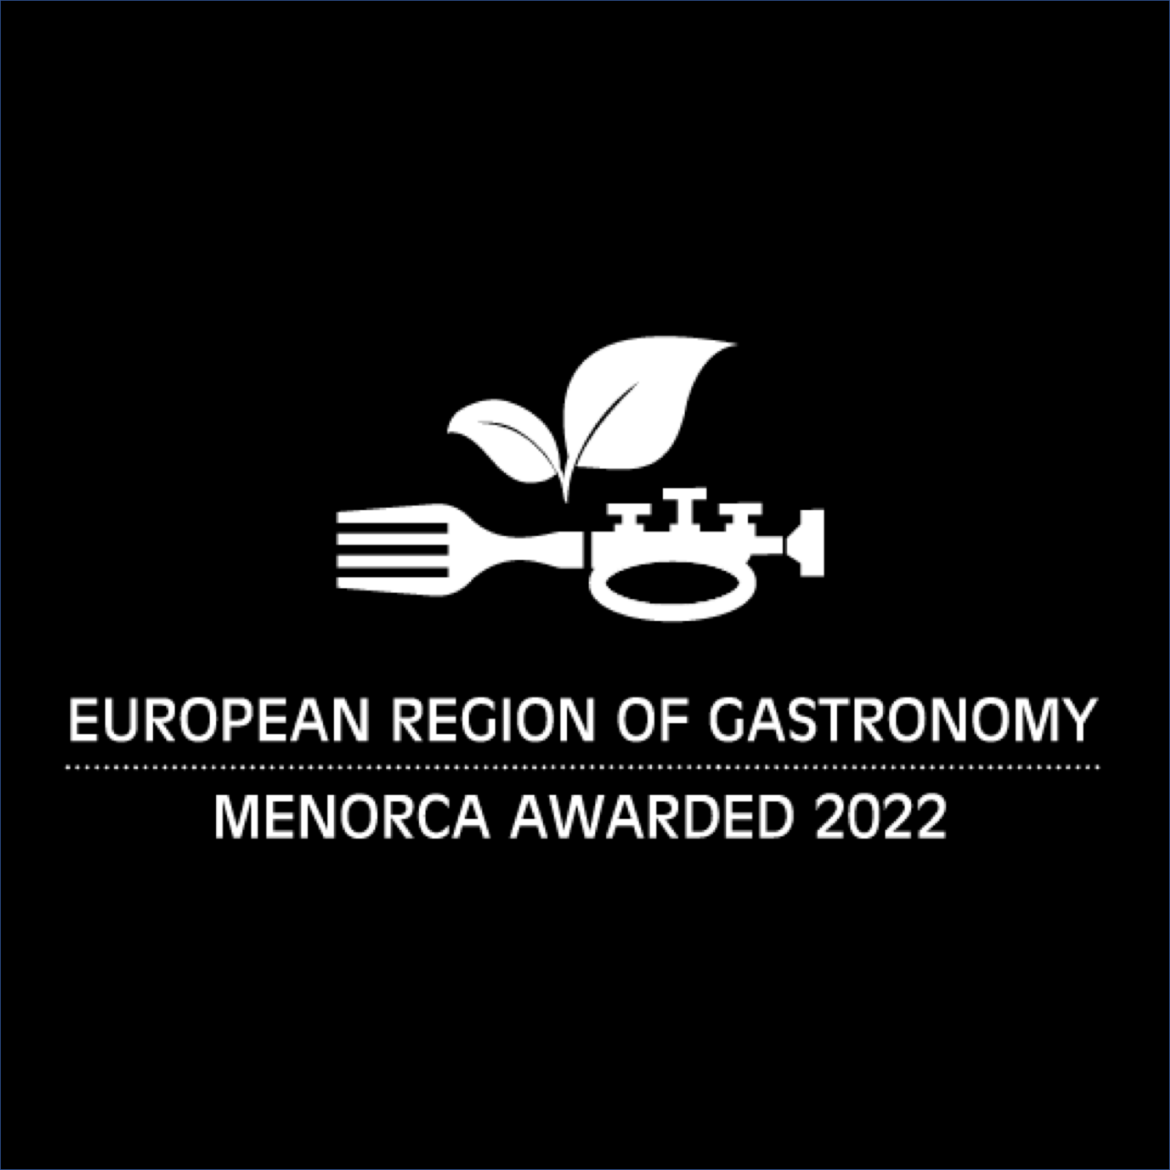 Menorca-European-Region-of-Gastronomy-2022_Logo_Square_WB.png